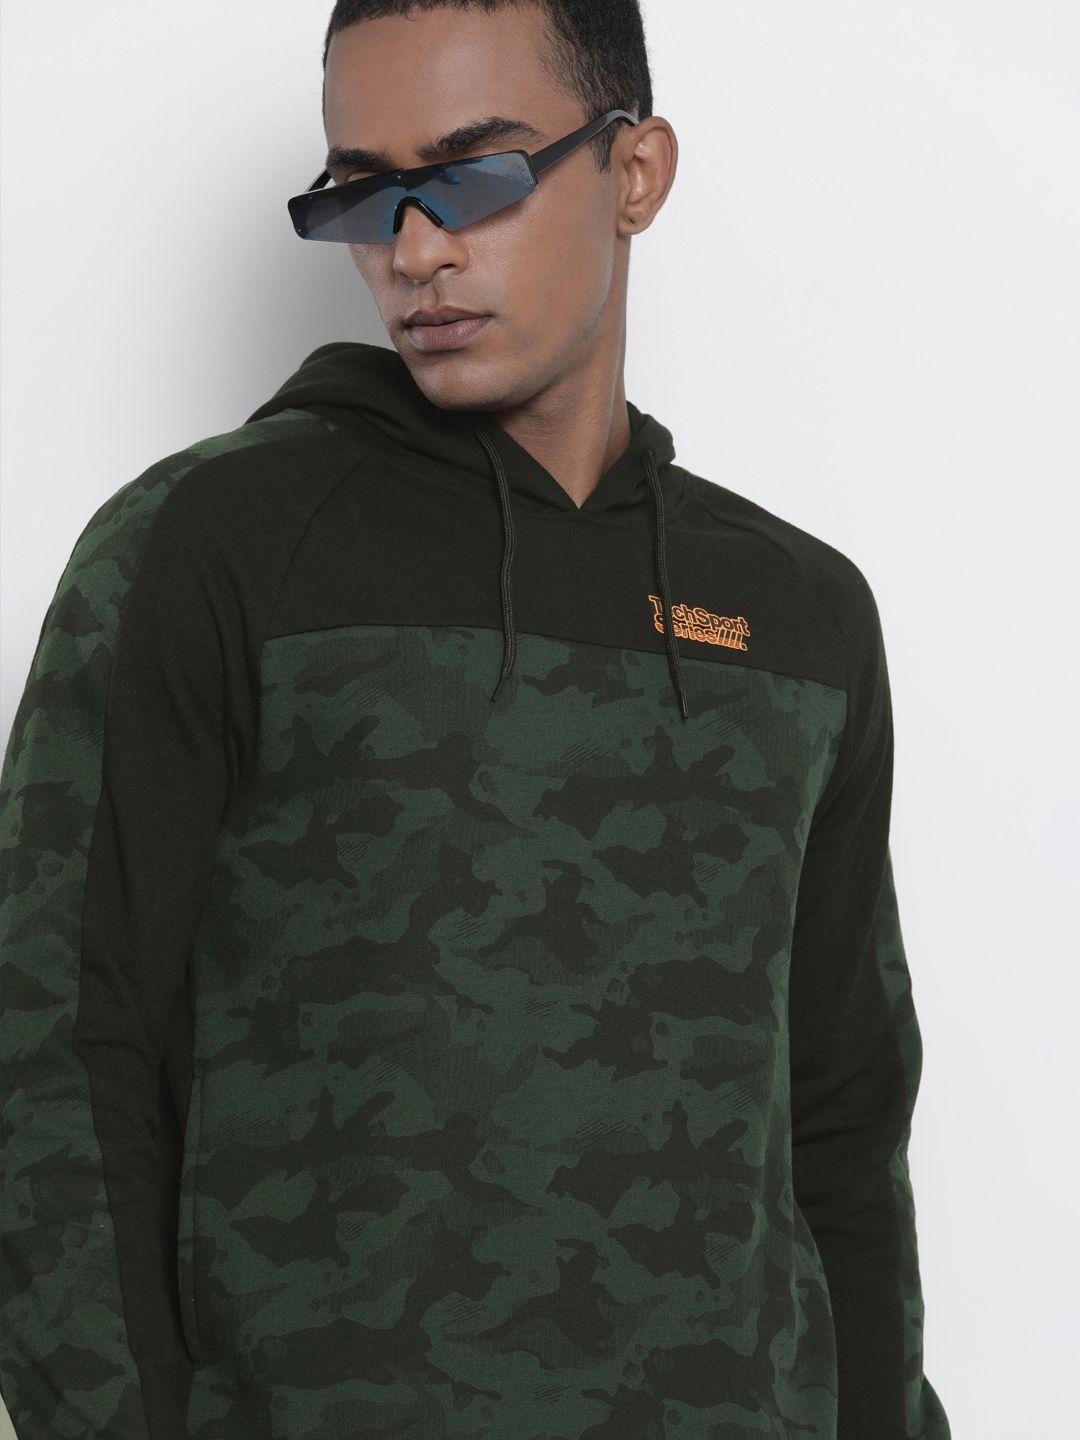 the-indian-garage-co-men-green-&-black-camouflage-print-hooded-sweatshirt